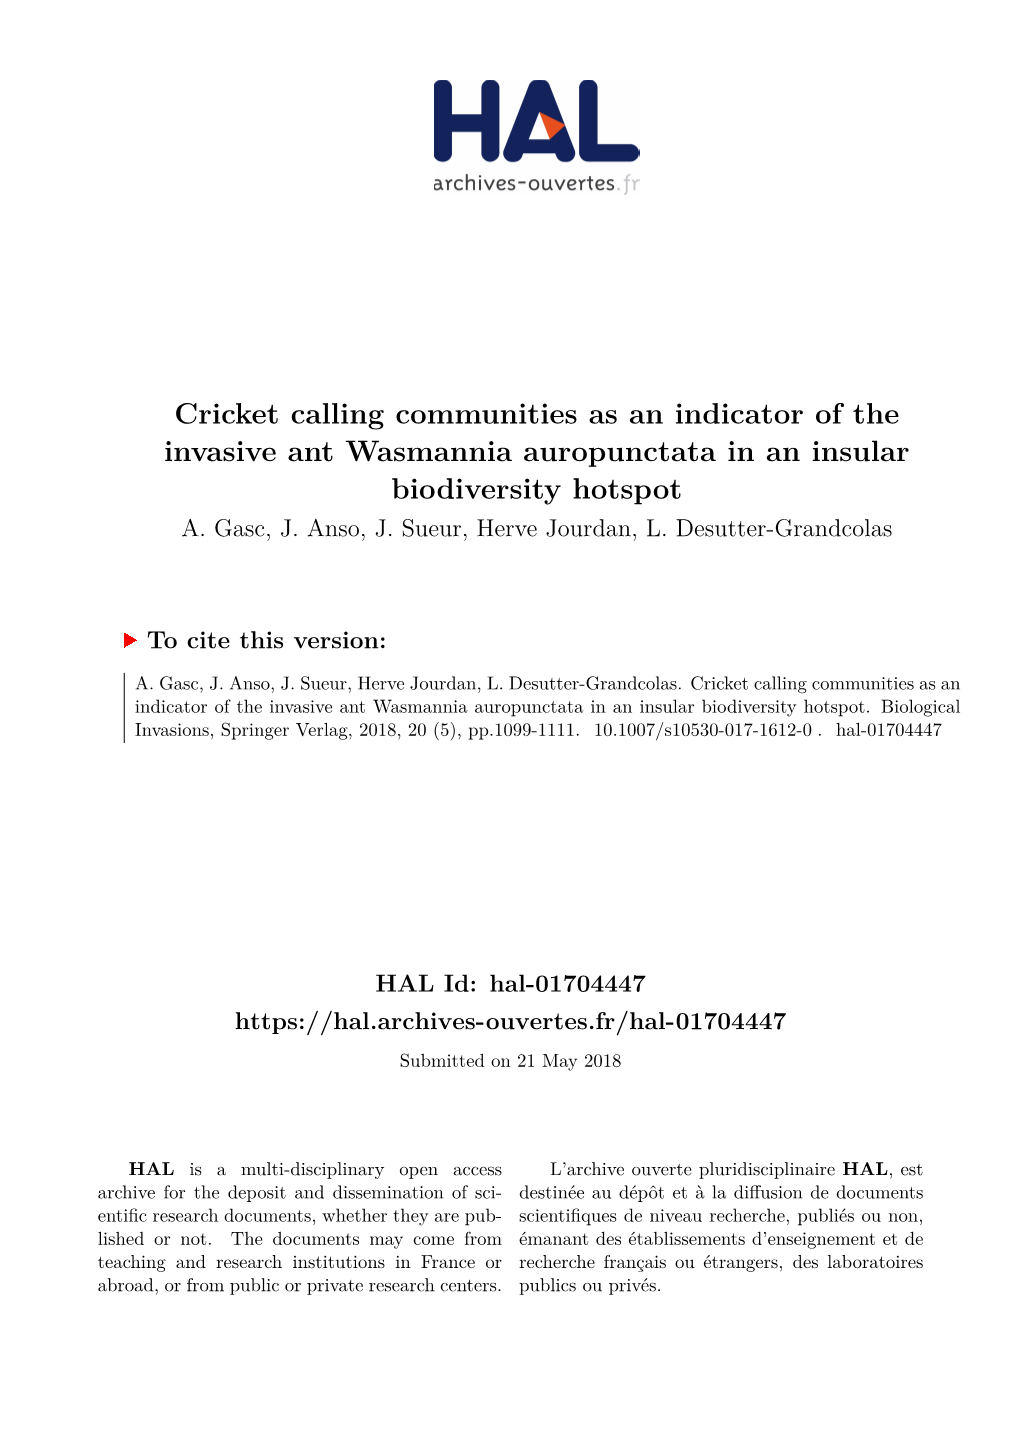 Cricket Calling Communities As an Indicator of the Invasive Ant Wasmannia Auropunctata in an Insular Biodiversity Hotspot A